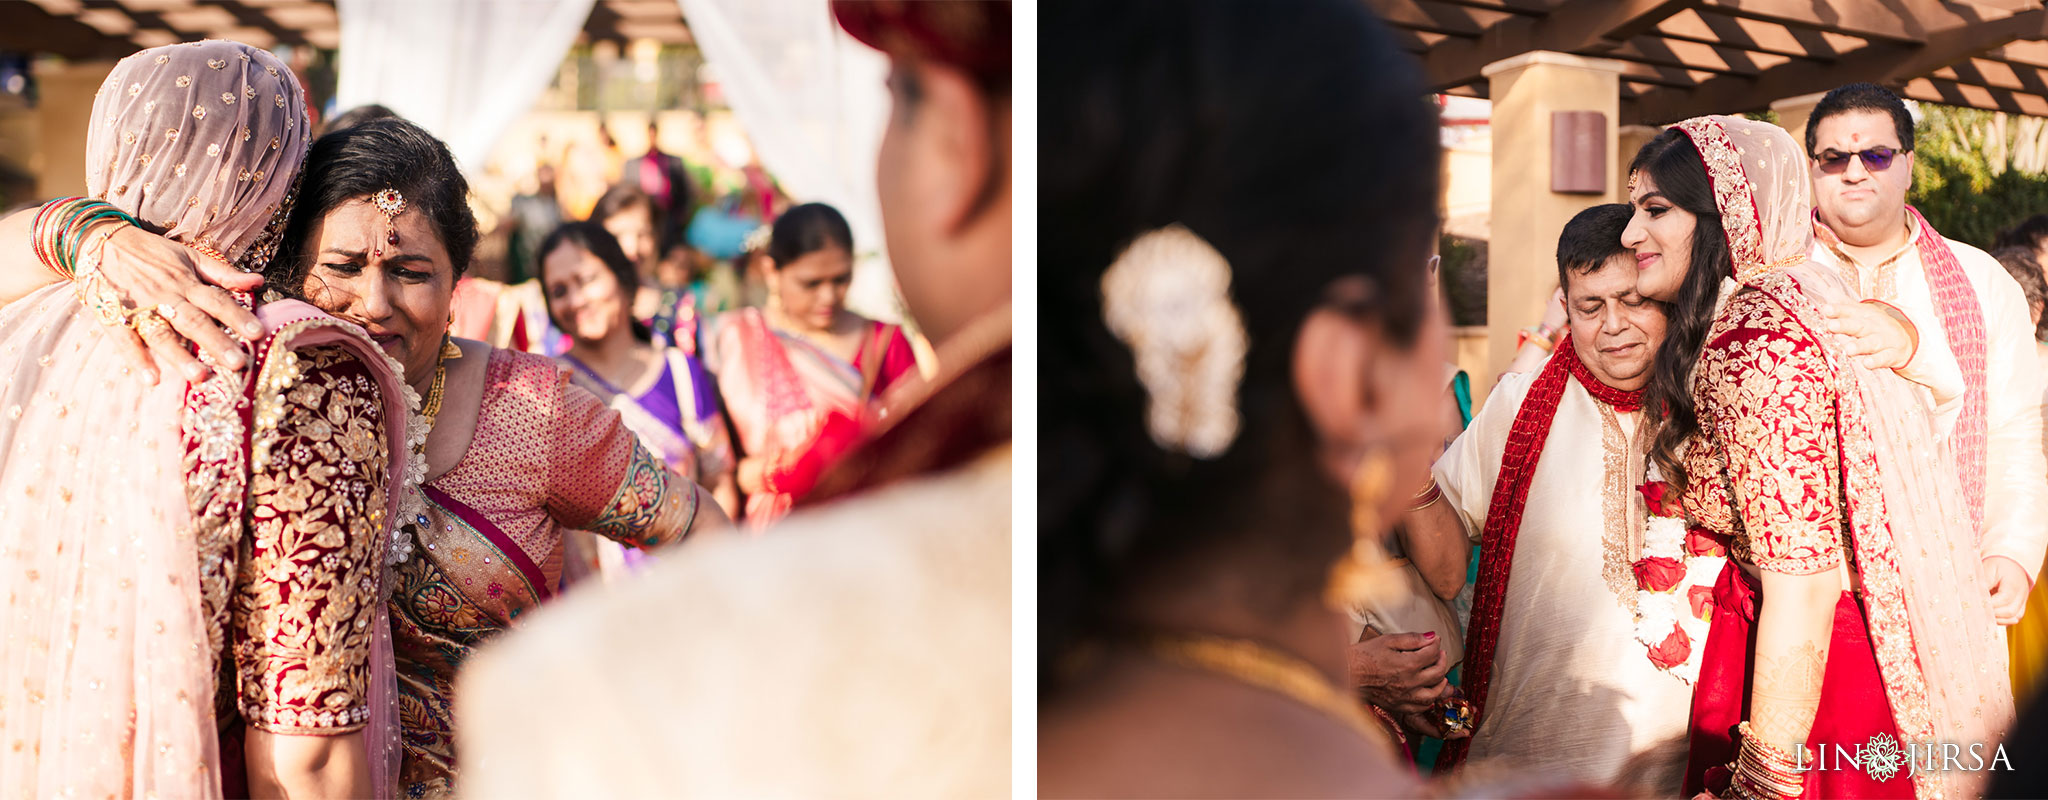 33 sheraton carlsbad resort indian wedding photography